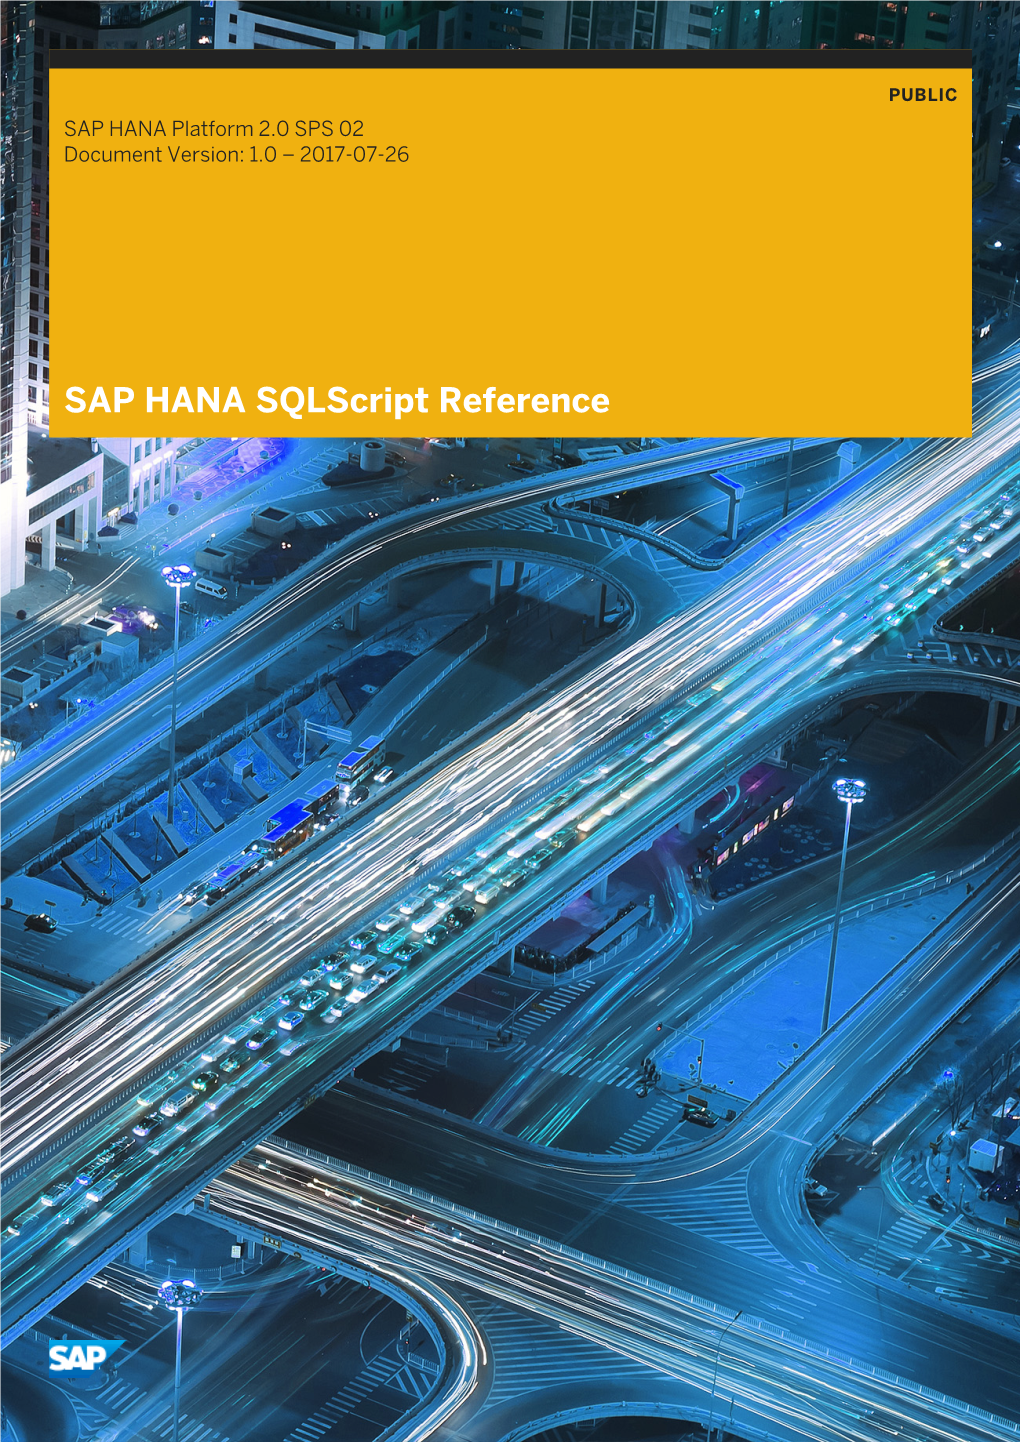 SAP HANA Sqlscript Reference Content